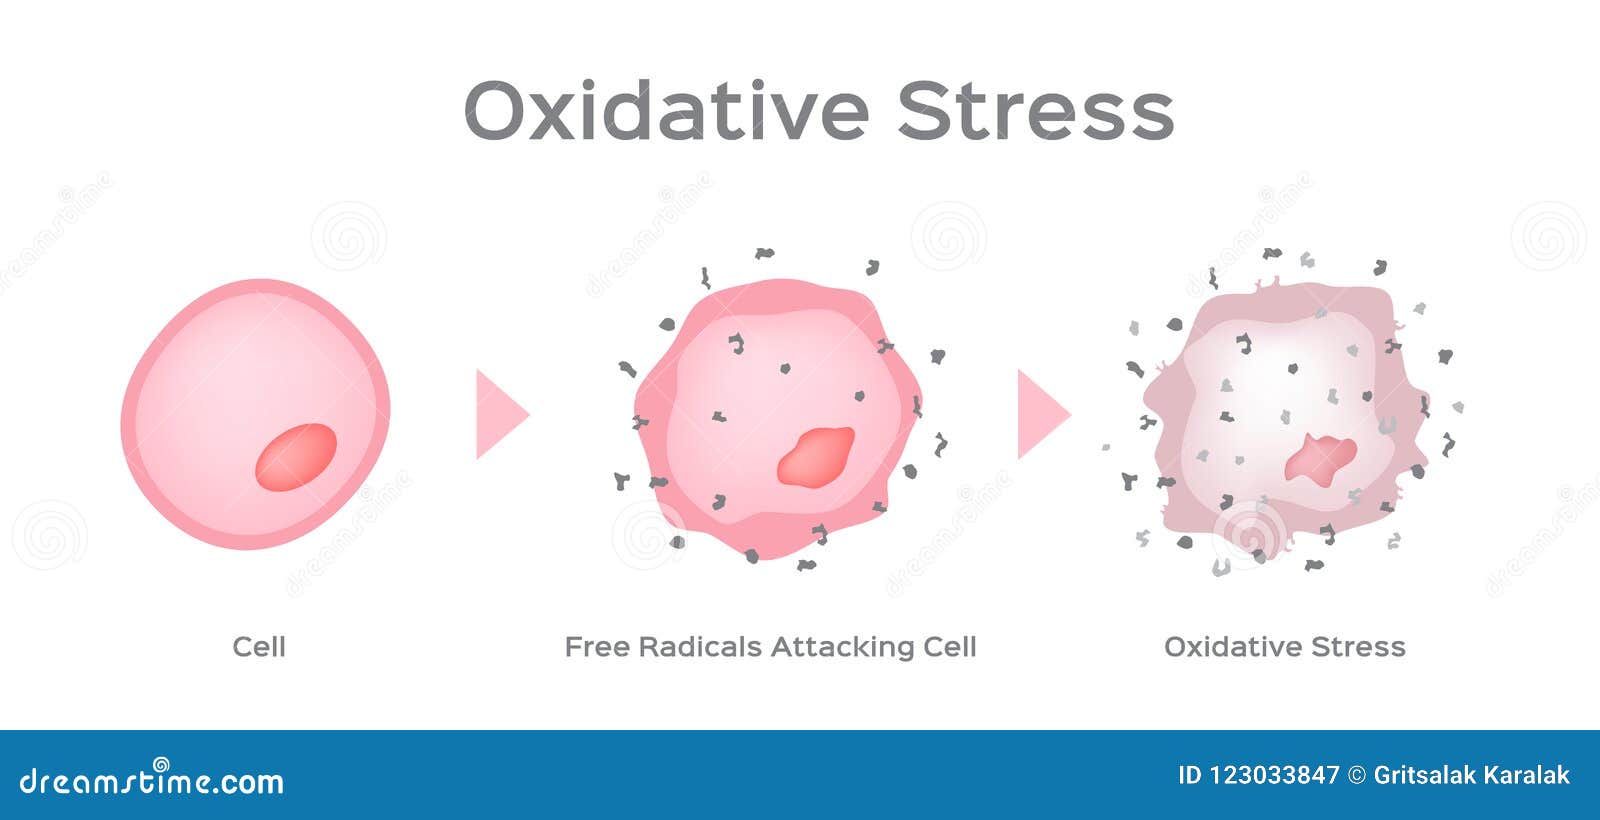 oxidative stress cell  / free radical